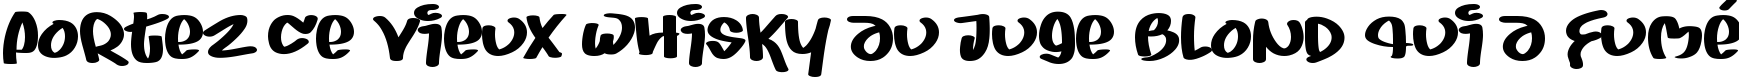 Пример написания шрифтом Juice текста на французском